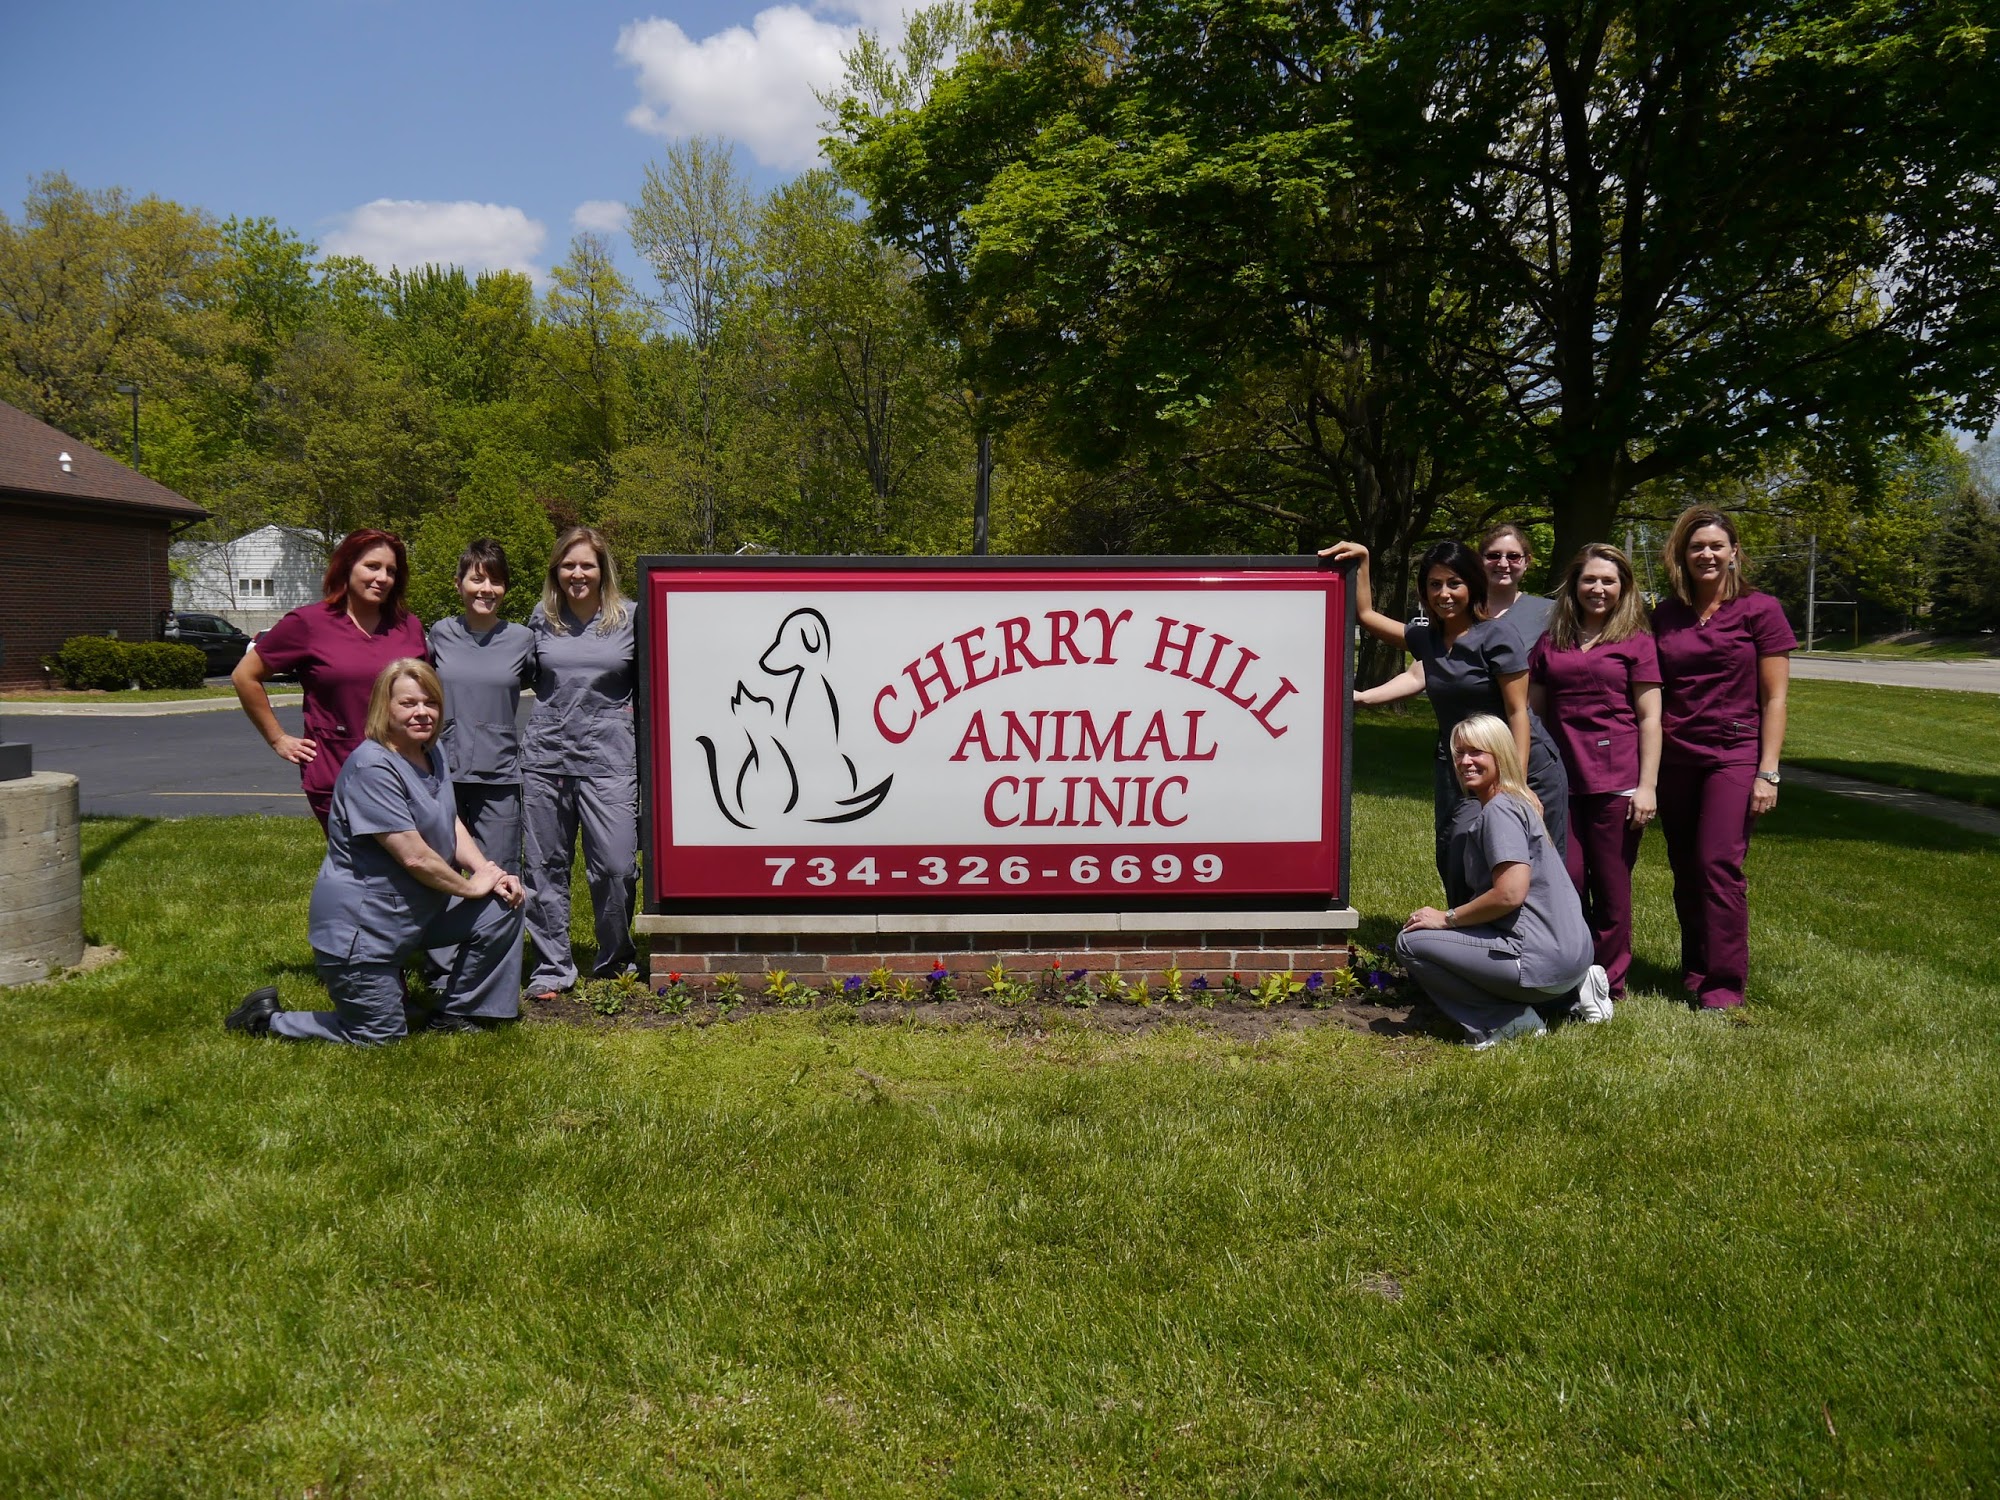 Cherry Hill Animal Clinic